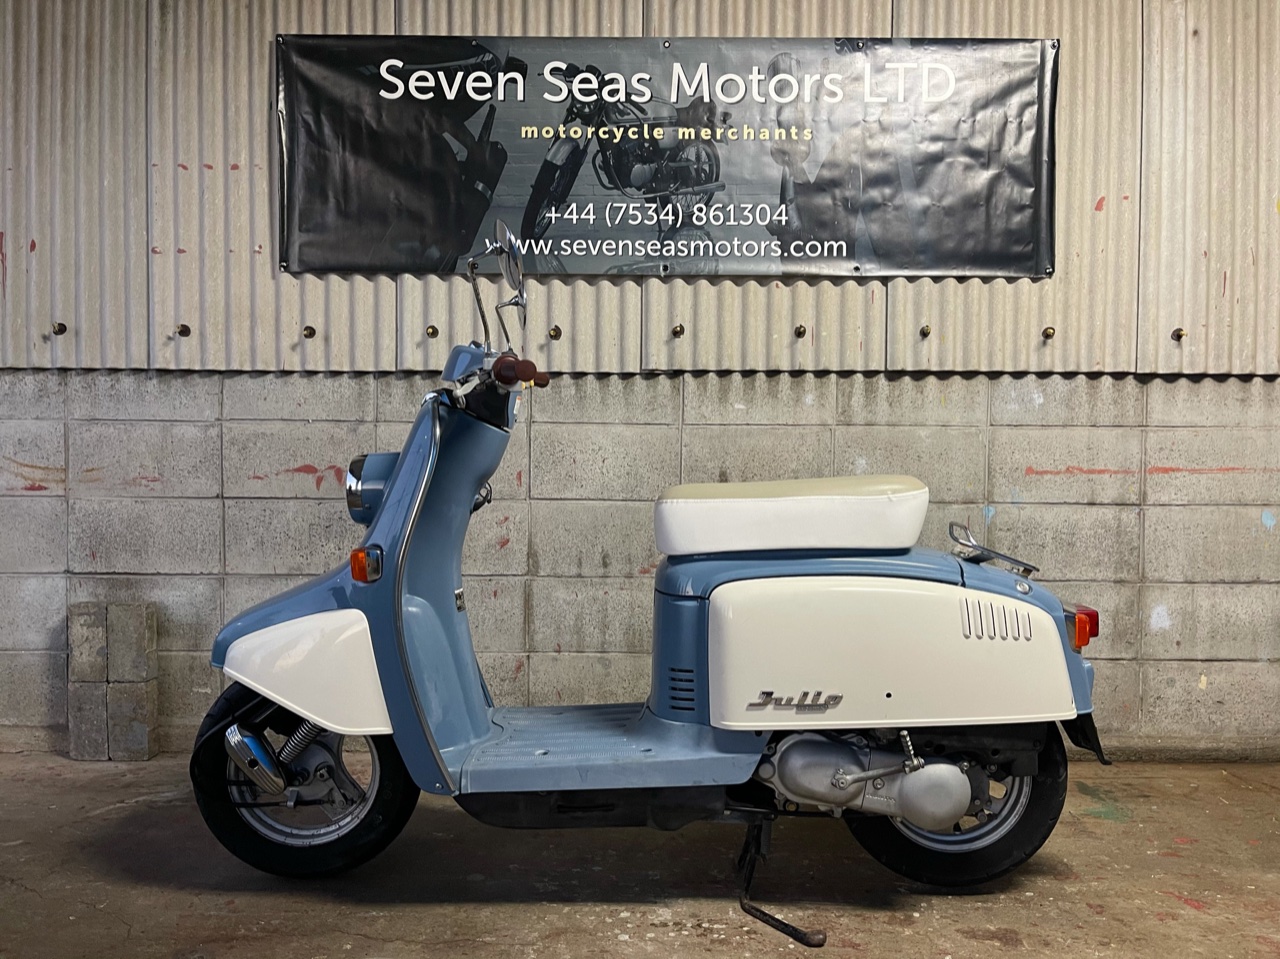 Honda-Julio-Moped | Seven Seas Motors